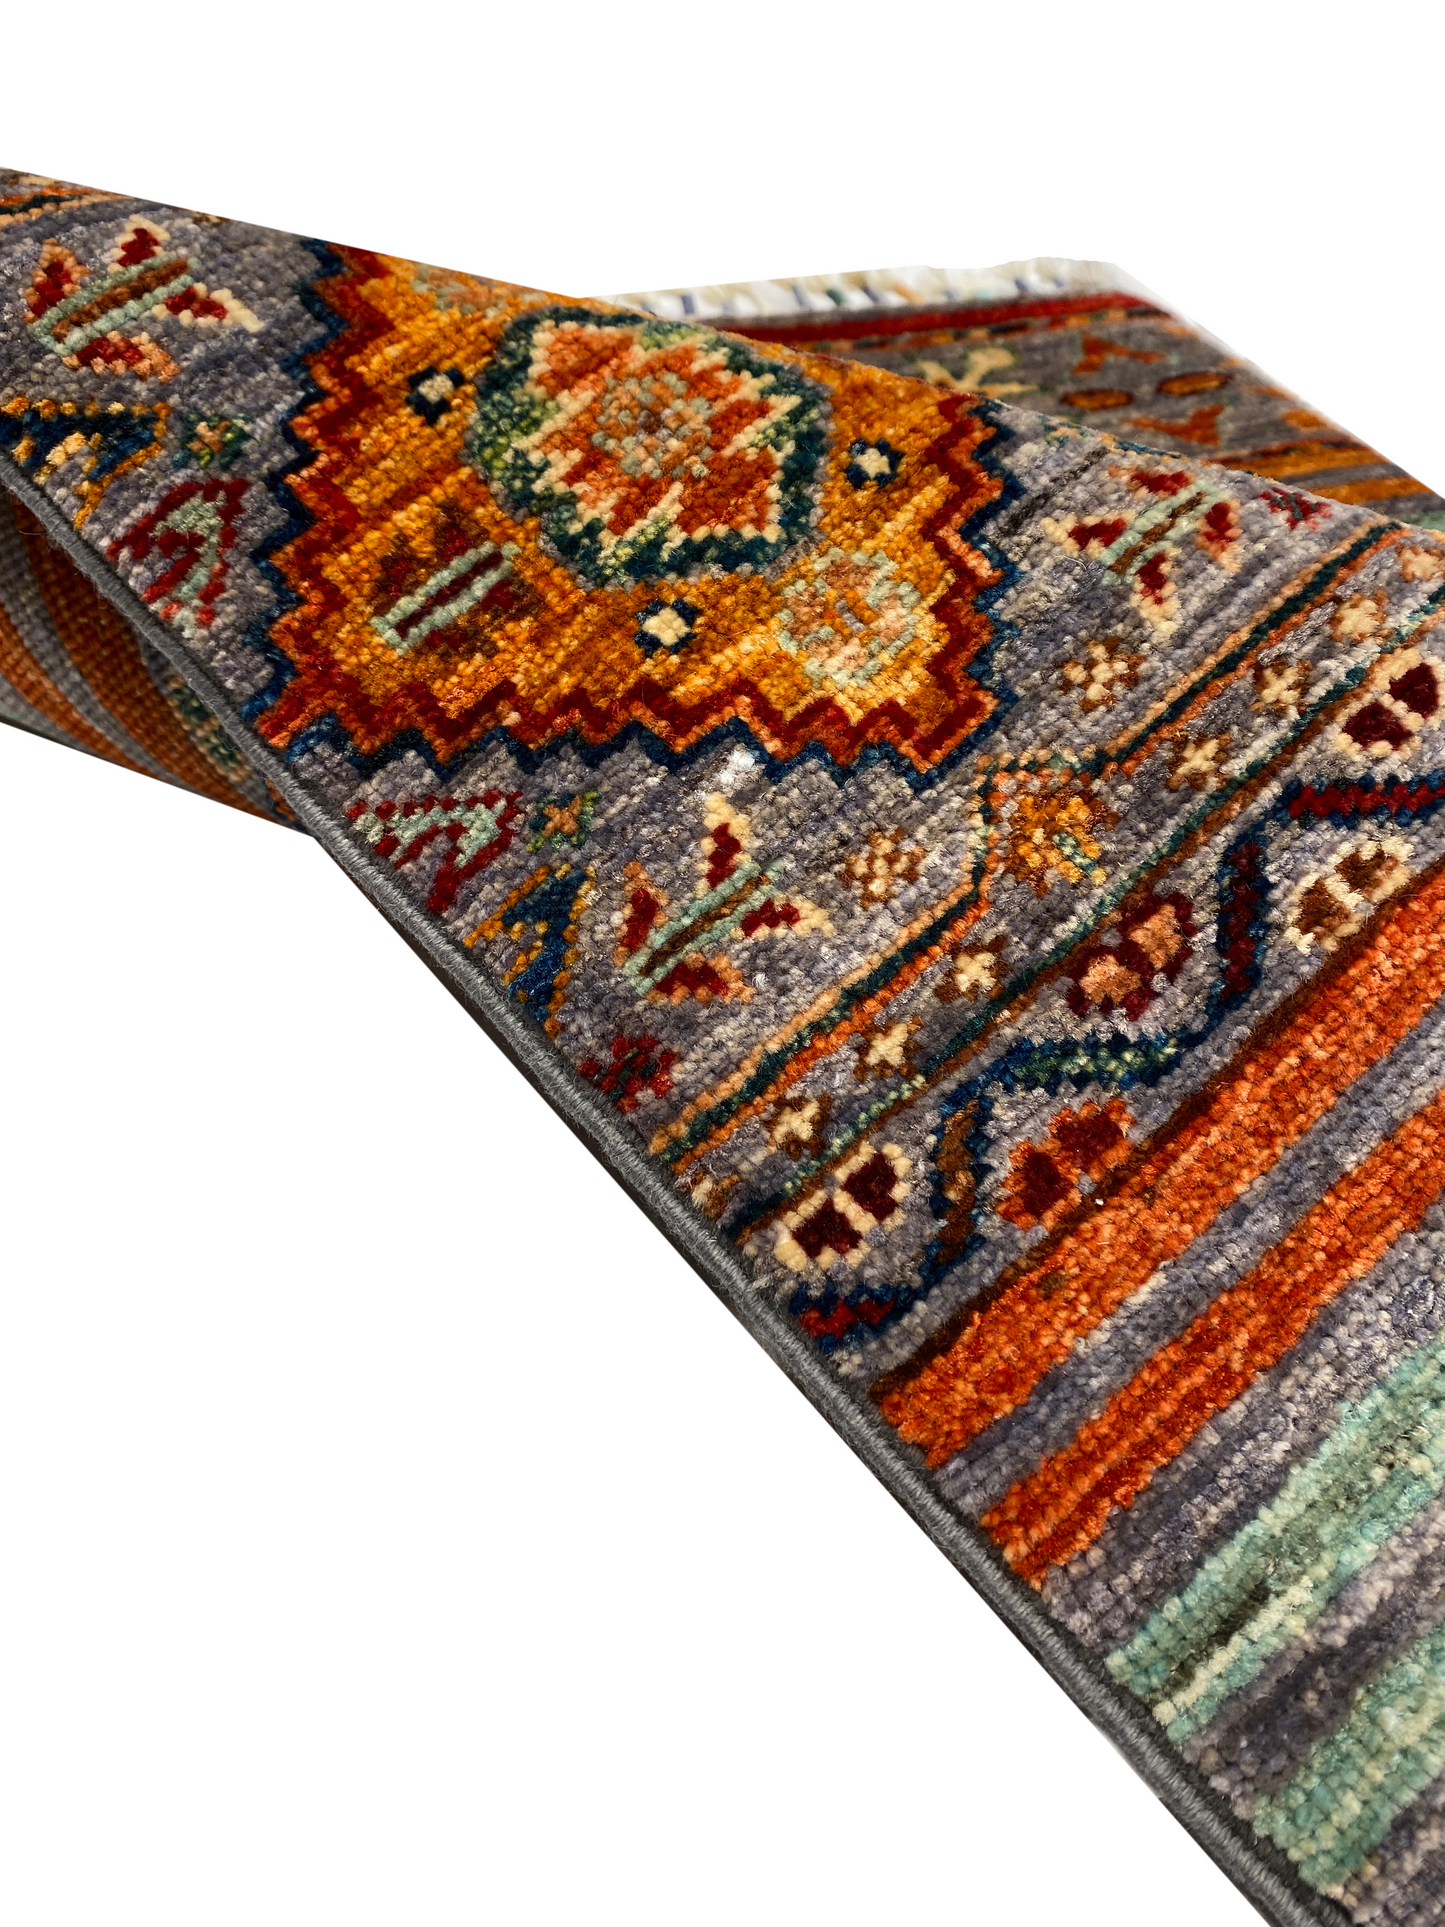 Şirvan Carpet 93 X 62 cm